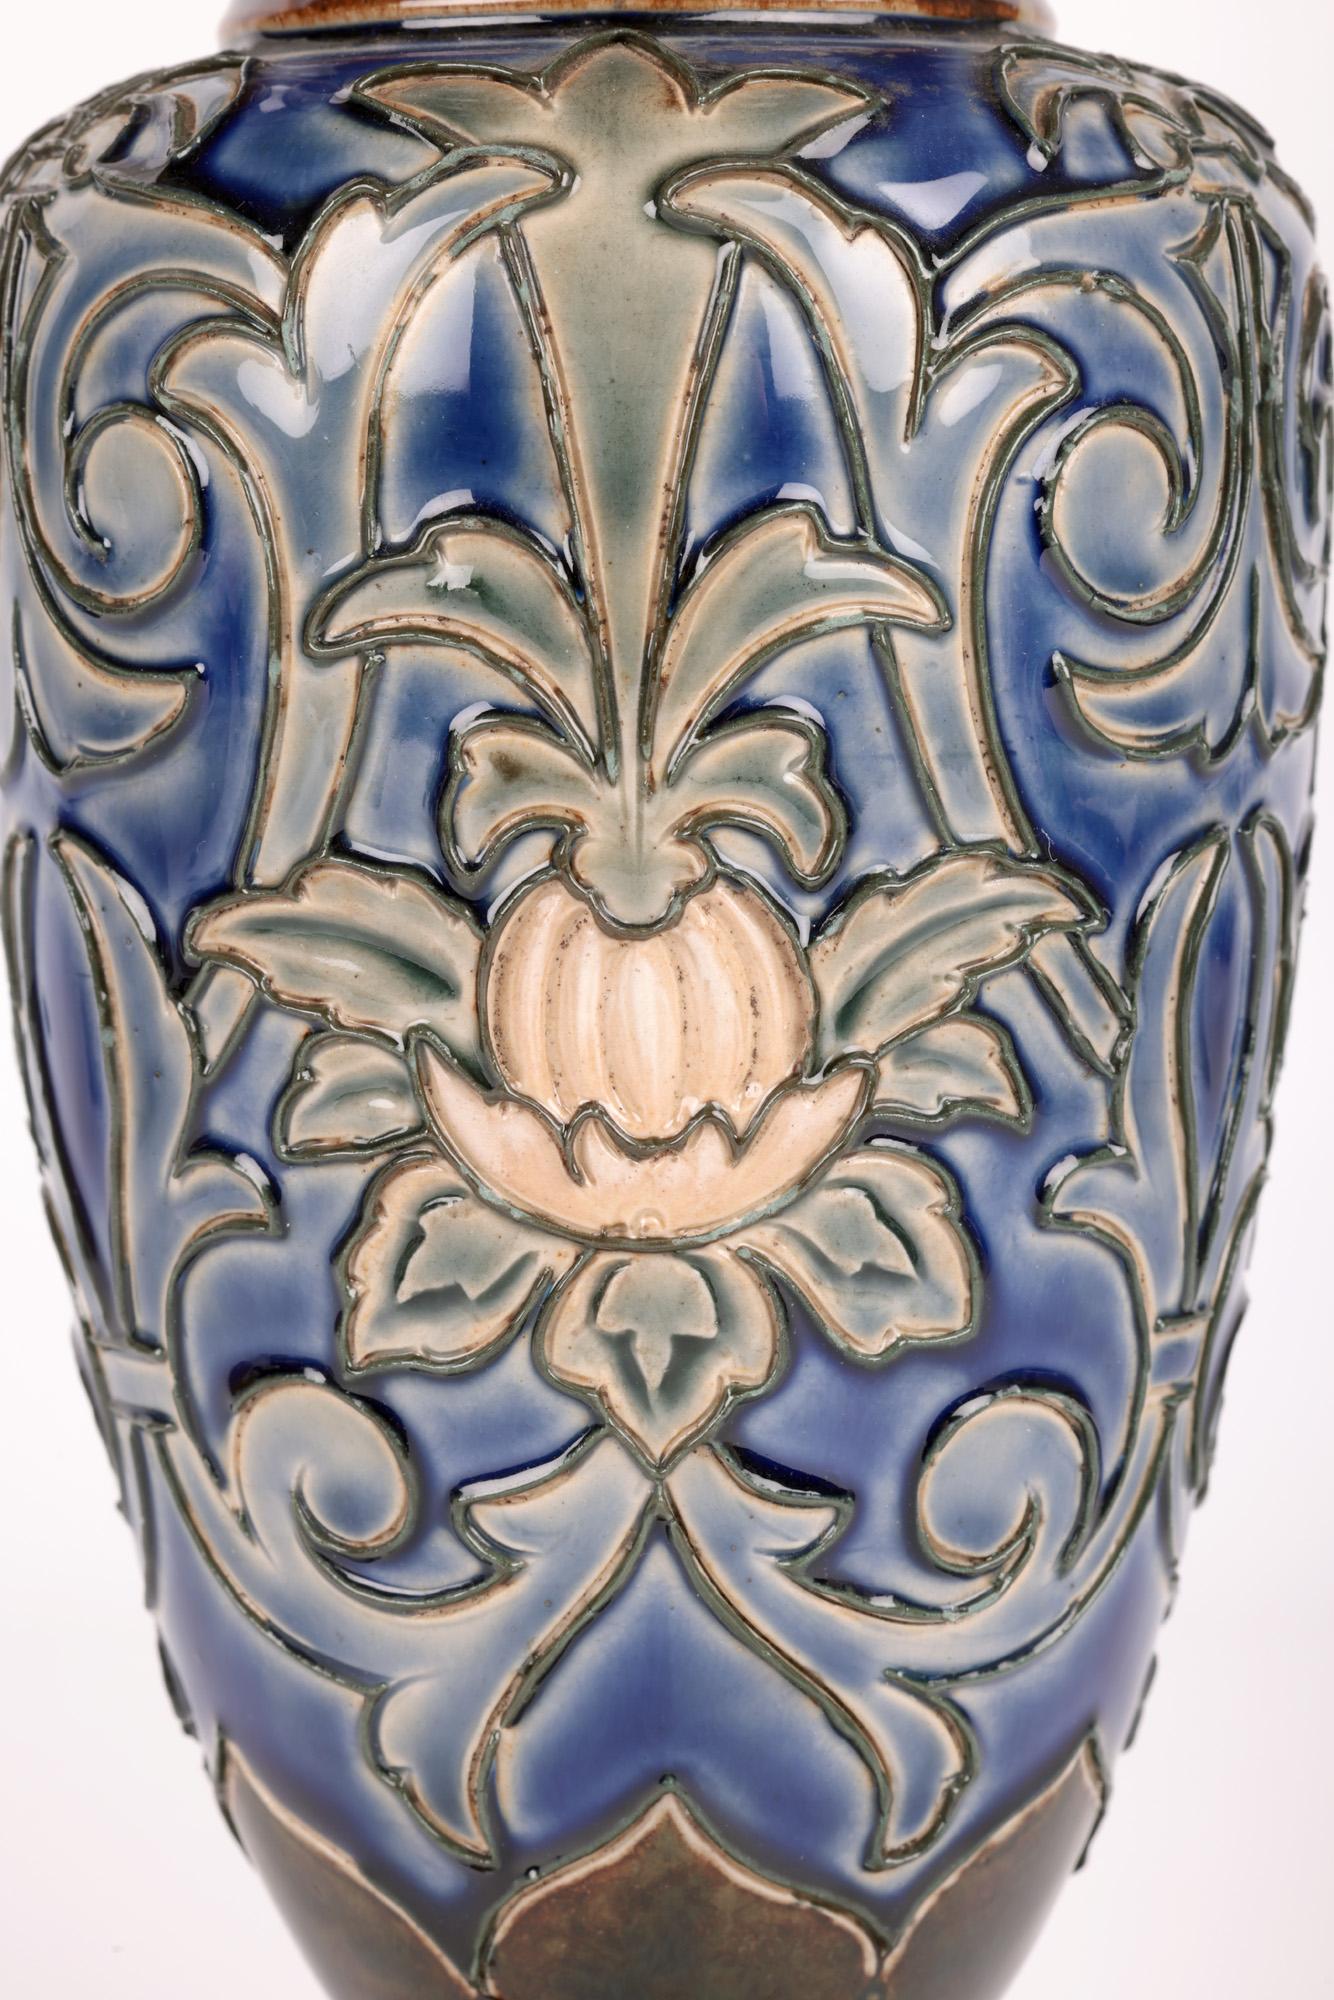 Aesthetic Movement Doulton Lambeth Stylized Floral Design Vase by Eliza Simmance